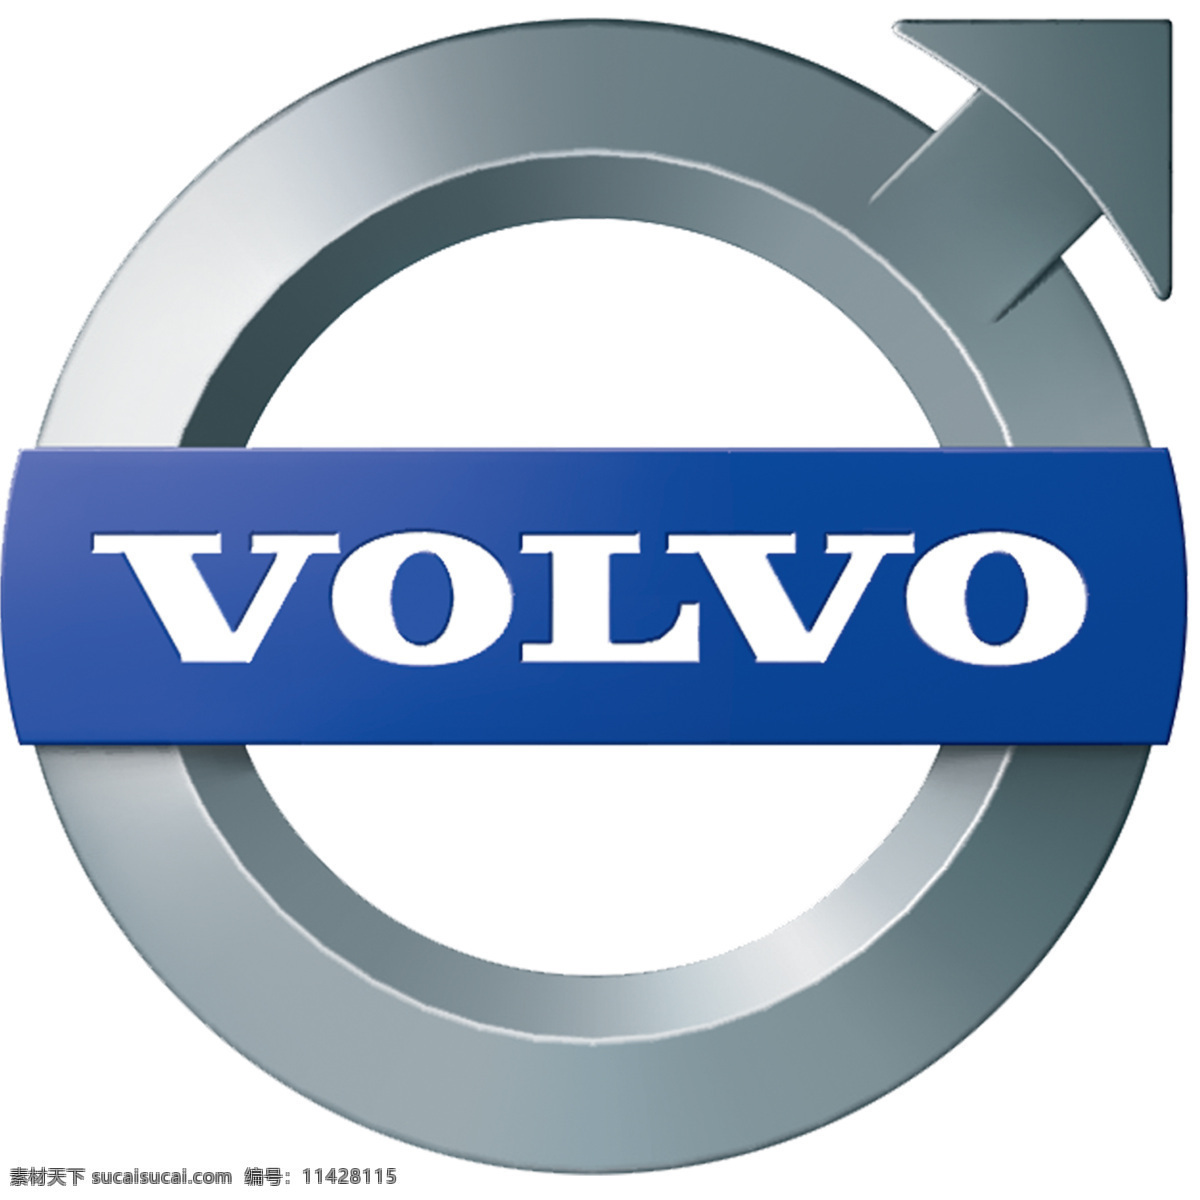 300 logo volvo 标志图标 企业 标志 汽车 汽车logo 设计图库 沃尔沃 设计素材 模板下载 富豪 psd源文件